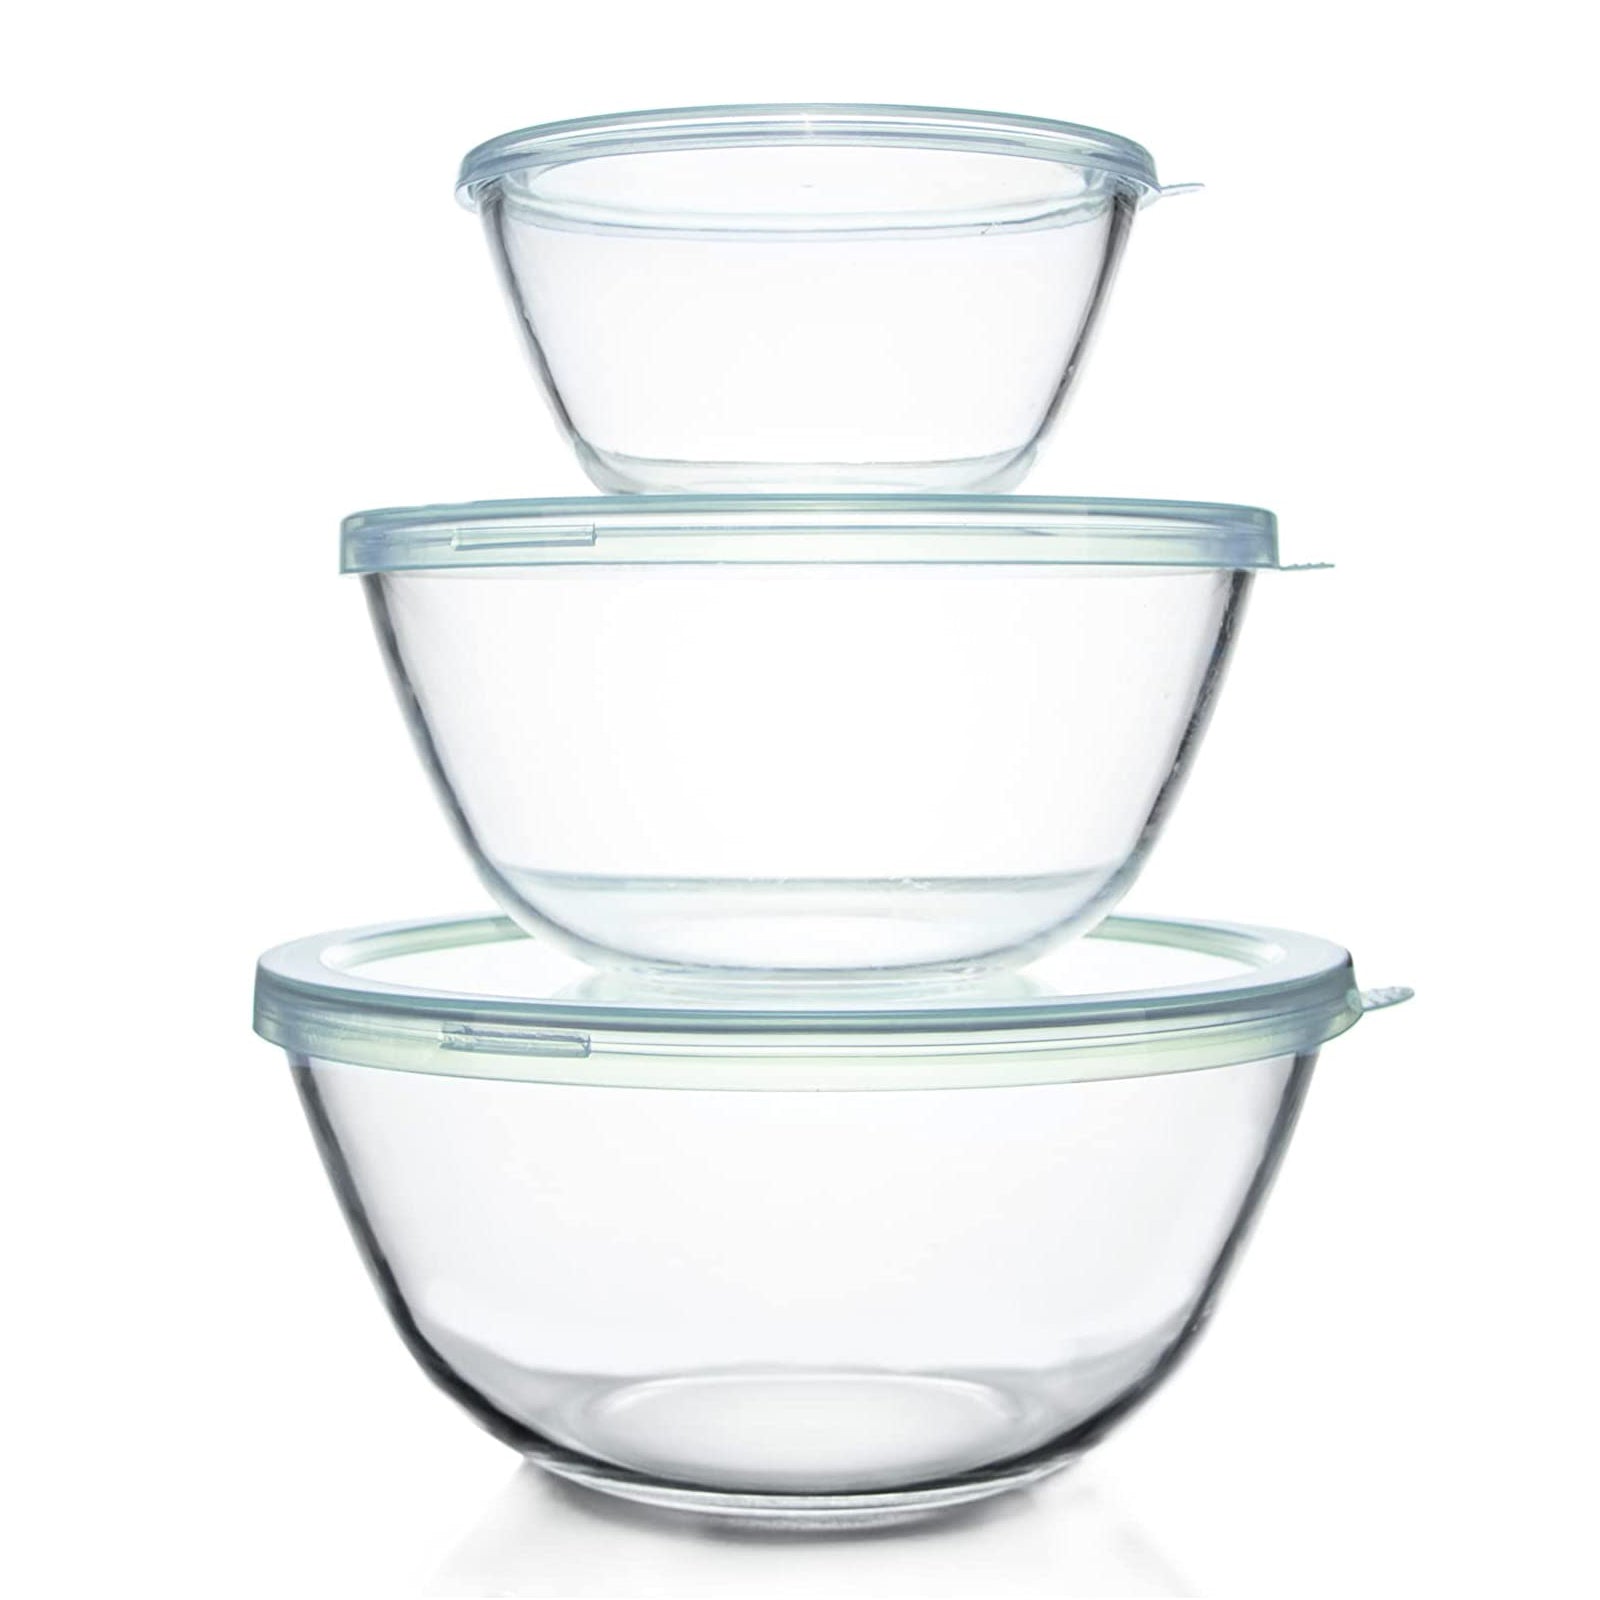  Luxshiny 2pcs Glass Mixing Bowl with Spout, Glass